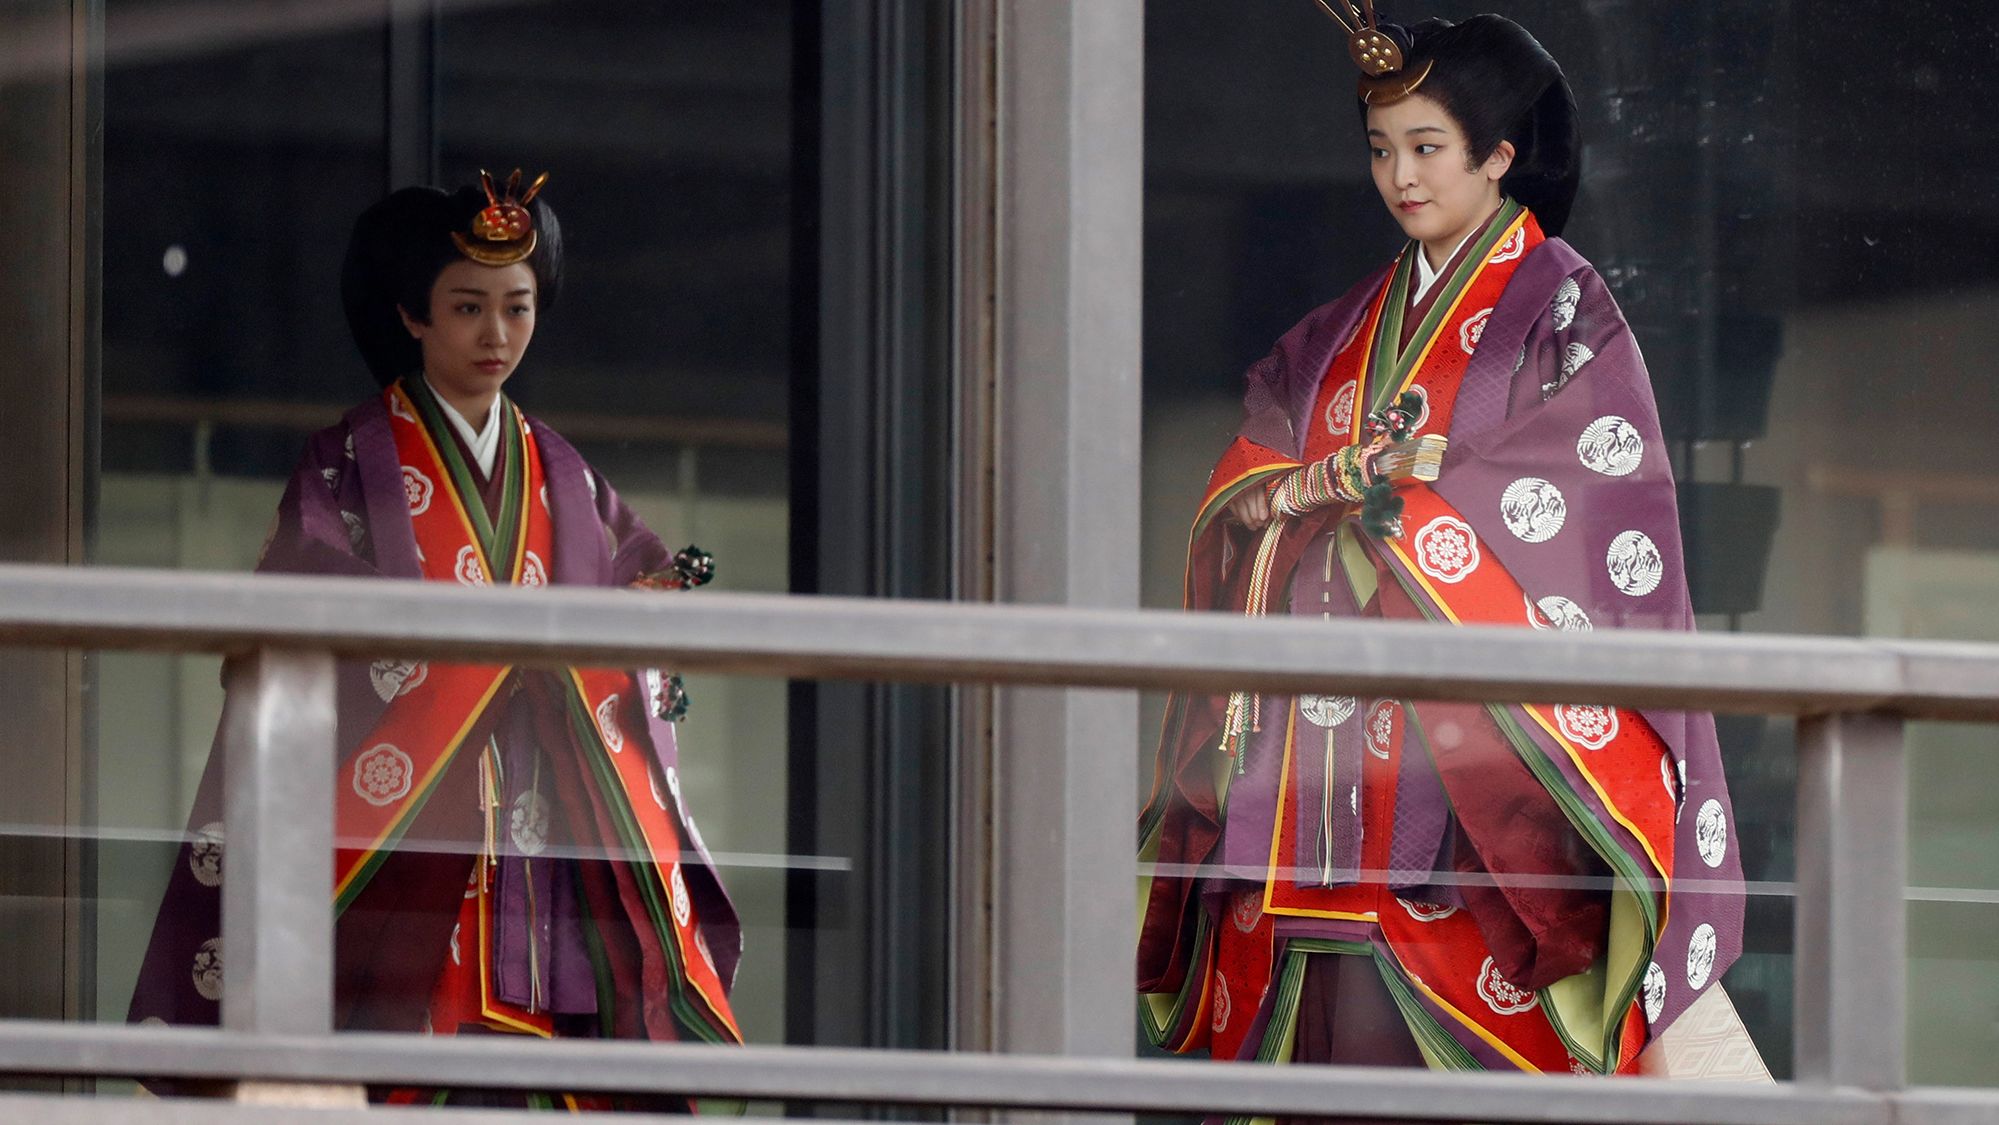 Japan's Princess Kako and Princess Mako arrive for Emperor Naruhito's enthronement ceremony.